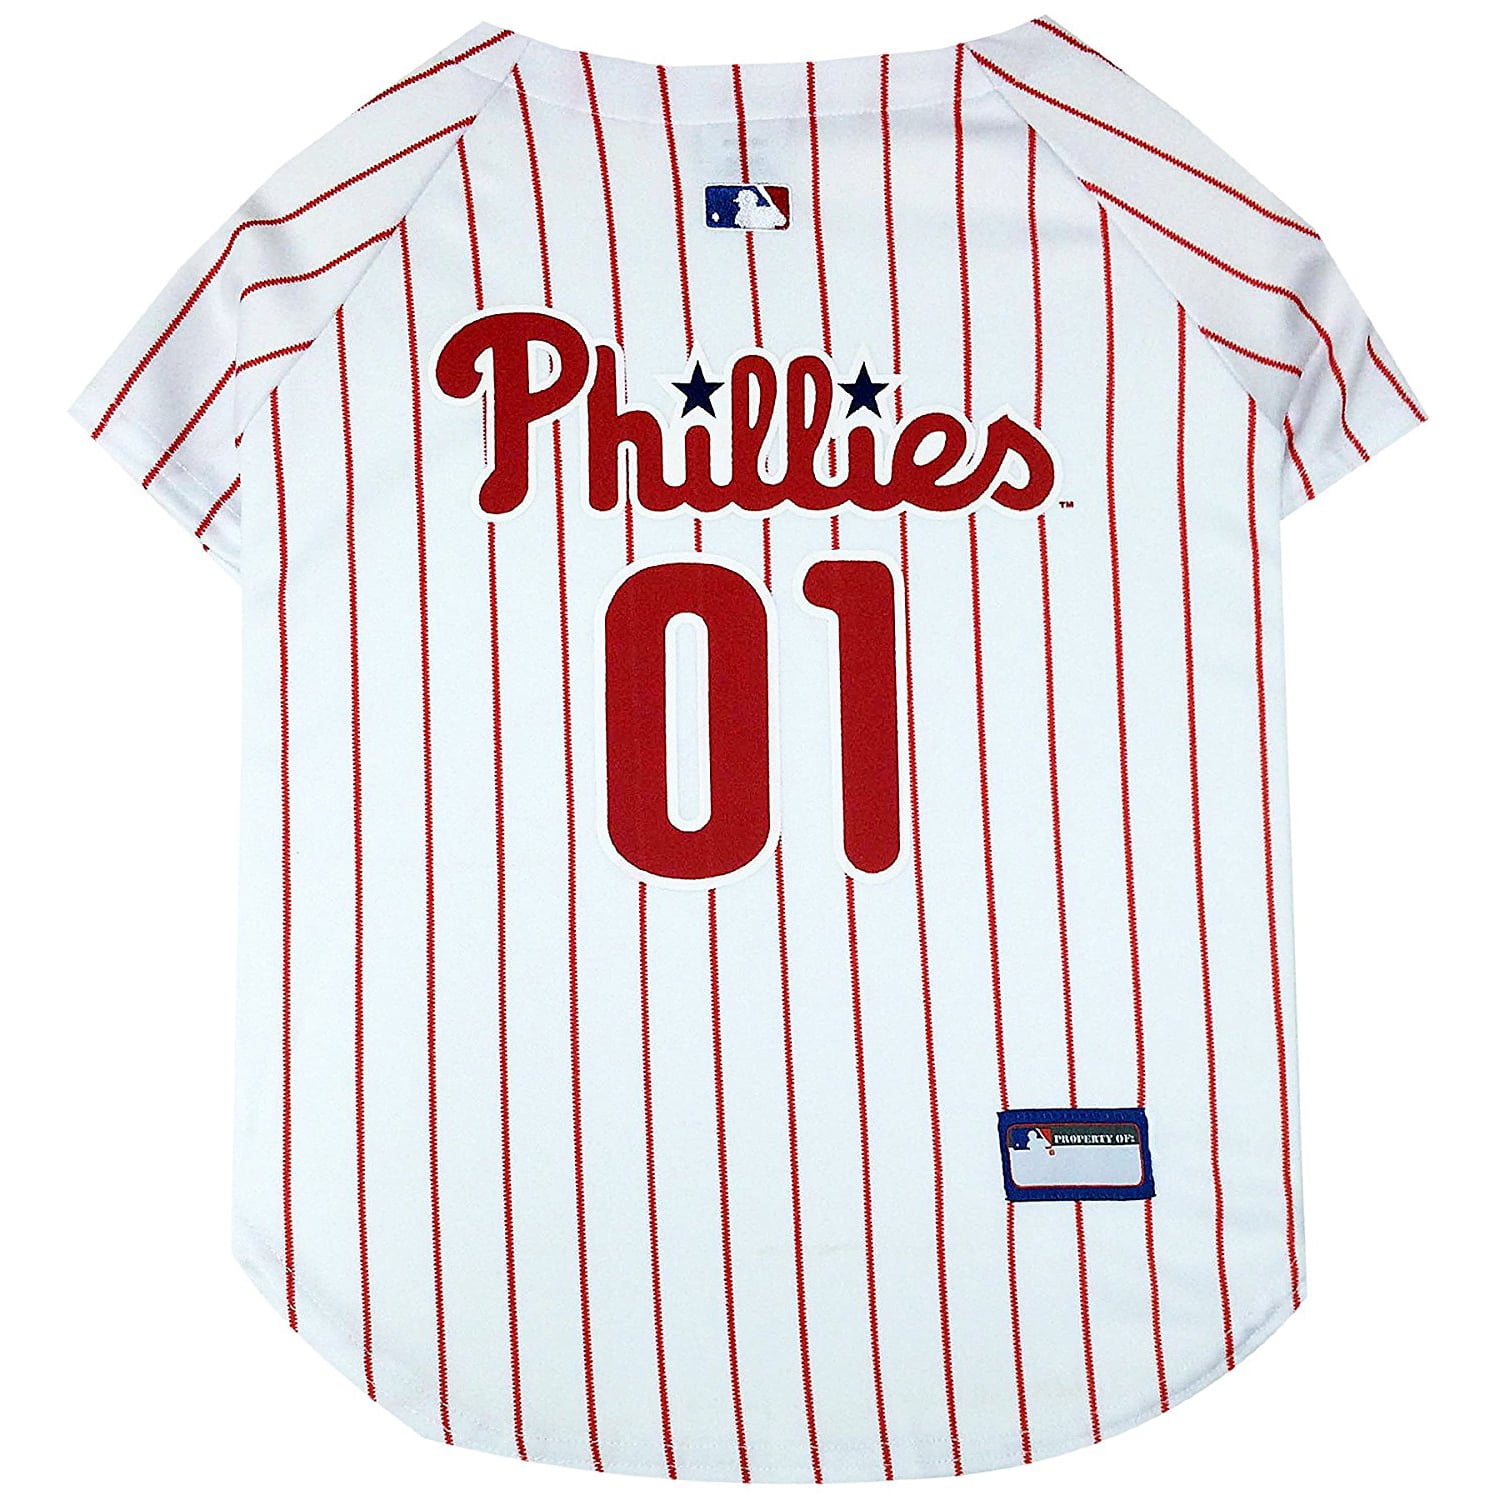 Philadelphia Phillies Jersey, Phillies Baseball Jerseys, Uniforms